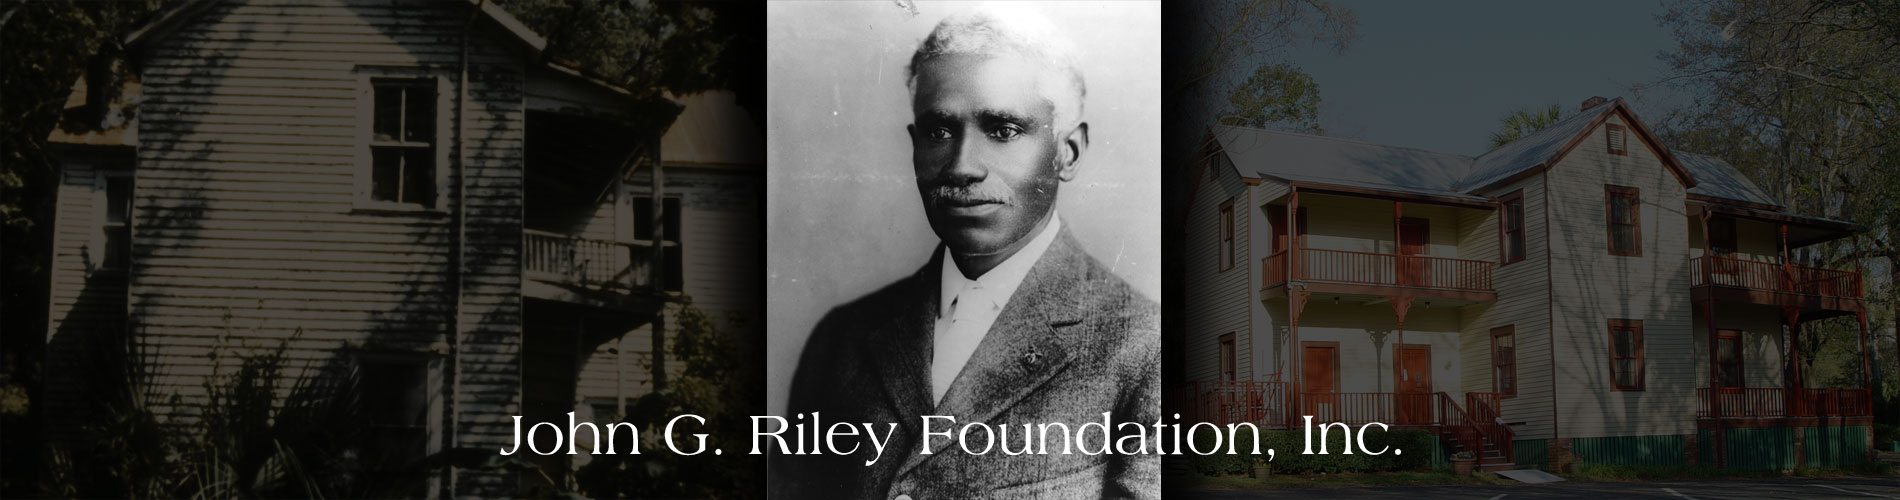 John G. Riley Foundation